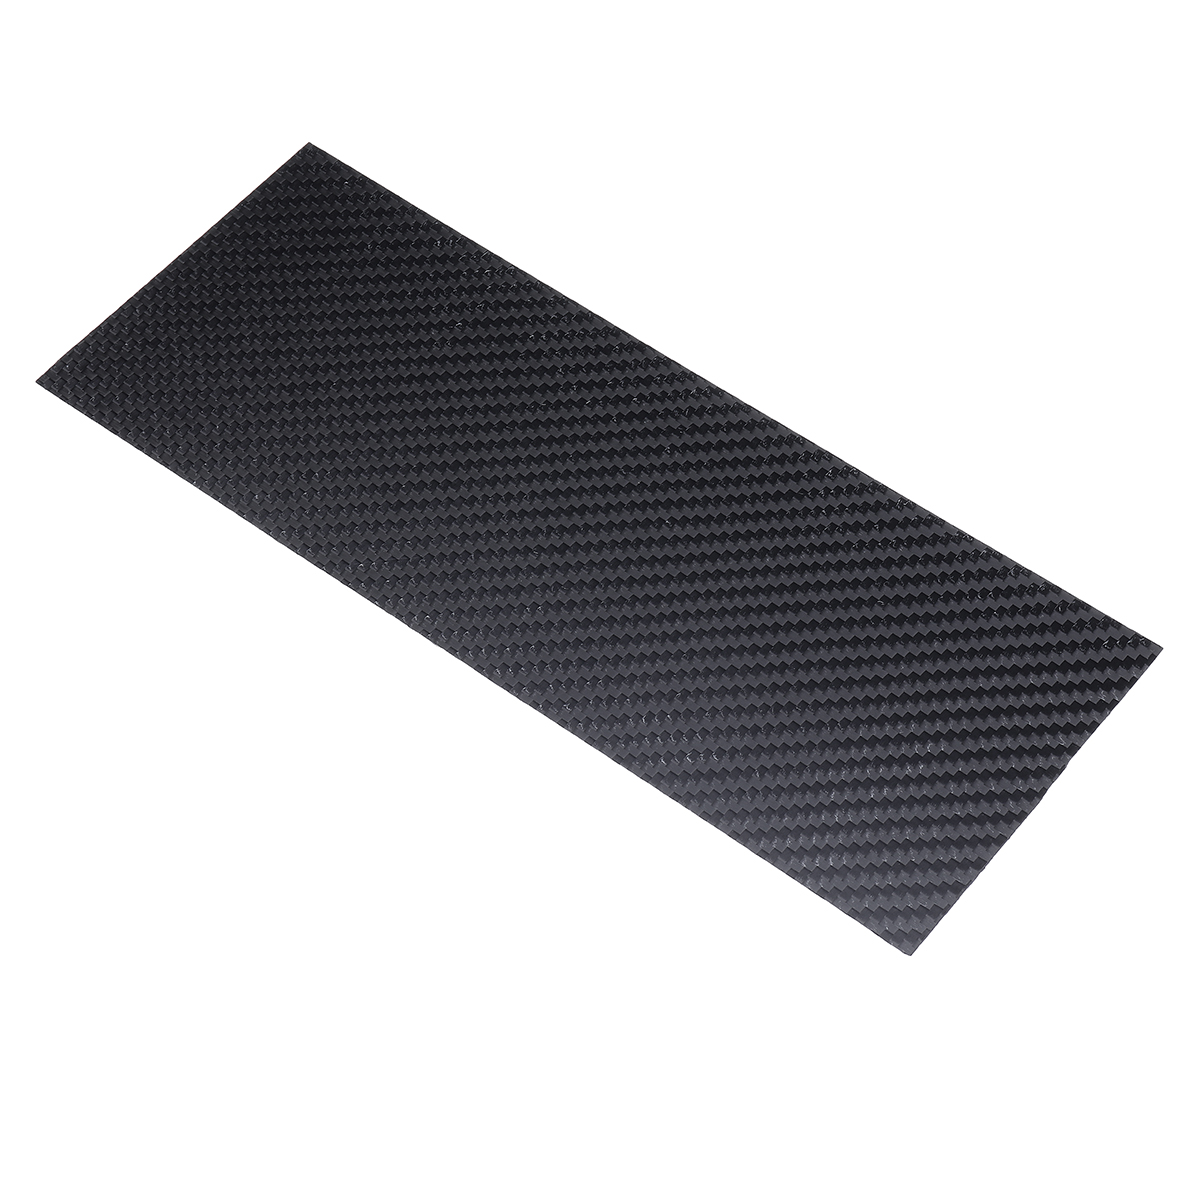 100x250x05-5mm-Black-Matte-Twill-Carbon-Fiber-Plate-Sheet-Board-Weave-Carbon-Fiber-Pannel-Various-Th-1444625-2